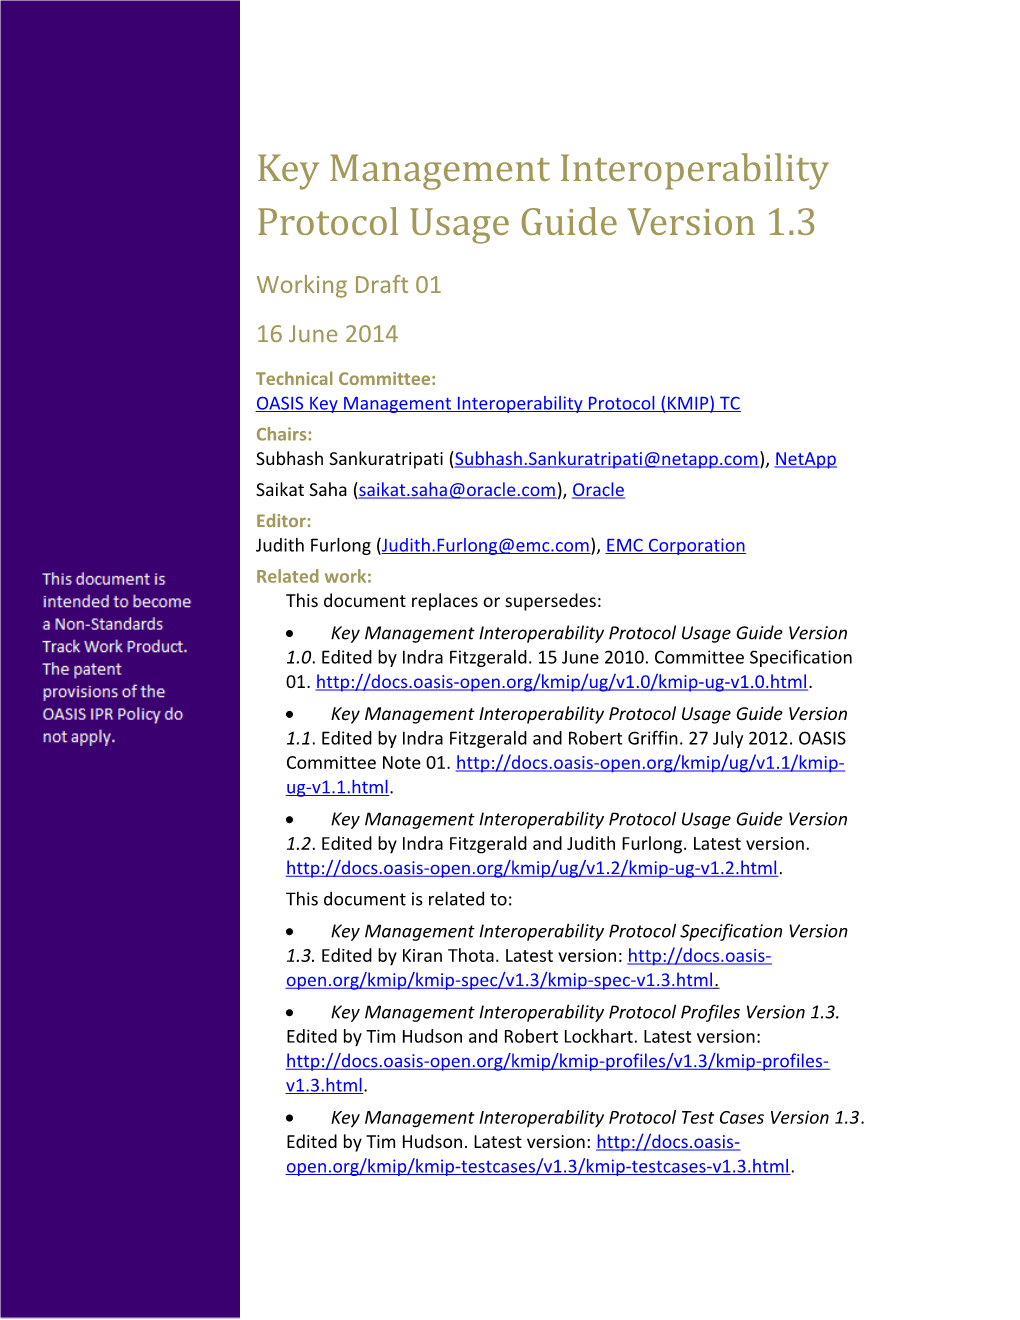 Key Management Interoperability Protocol Usage Guide Version 1.3